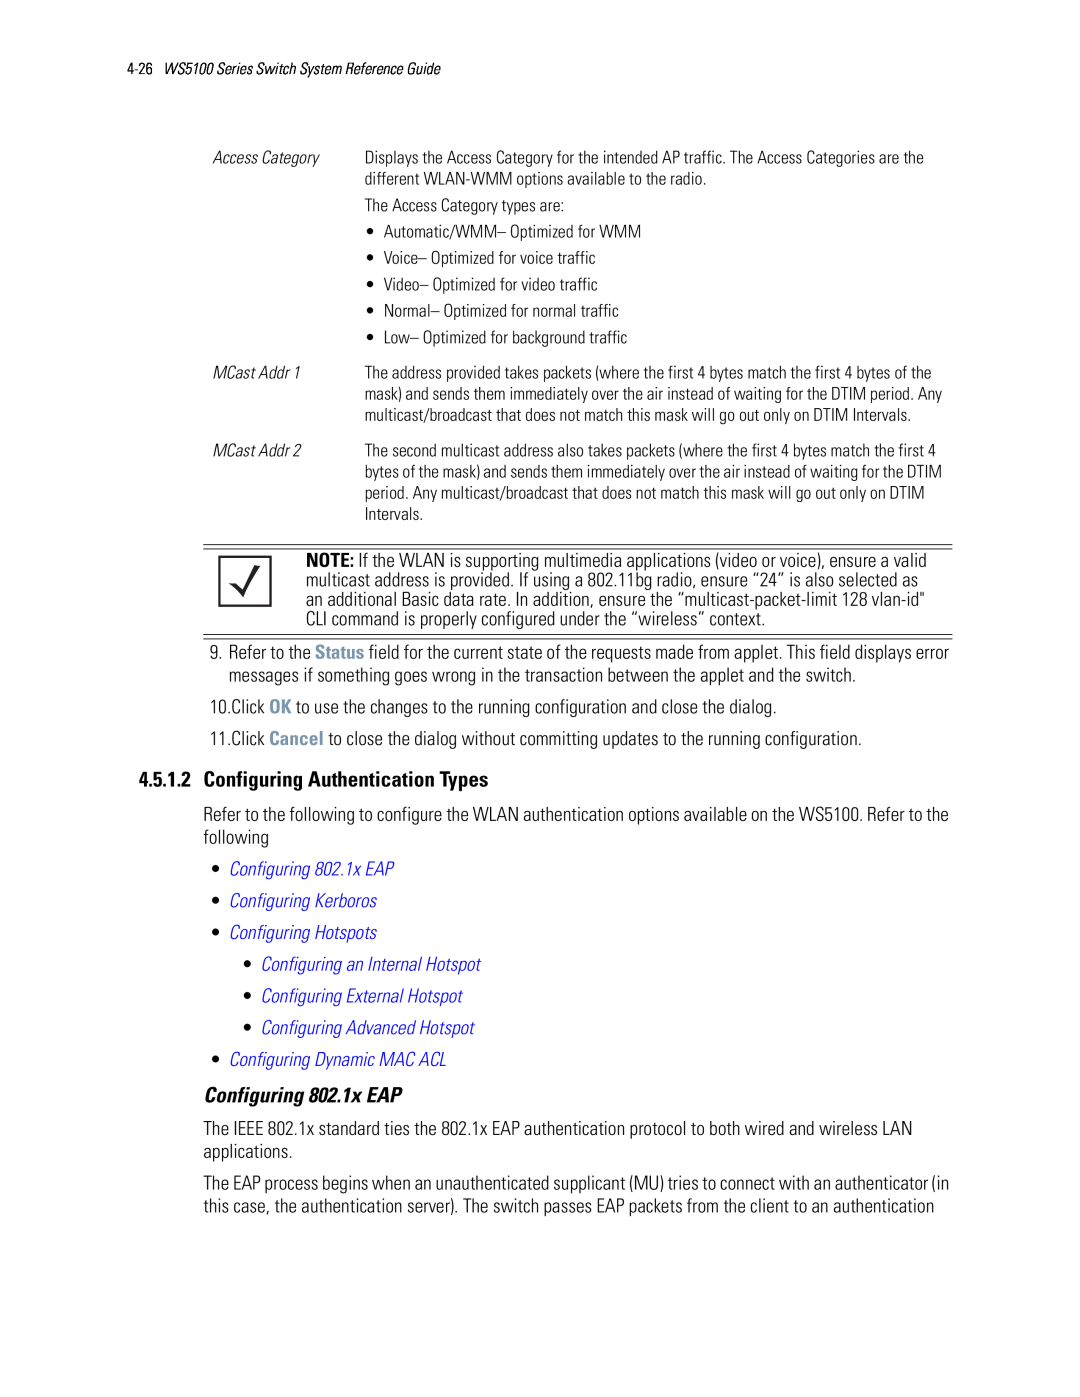 Motorola WS5100 manual 4.5.1.2Configuring Authentication Types, Configuring 802.1x EAP, •Configuring Hotspots 